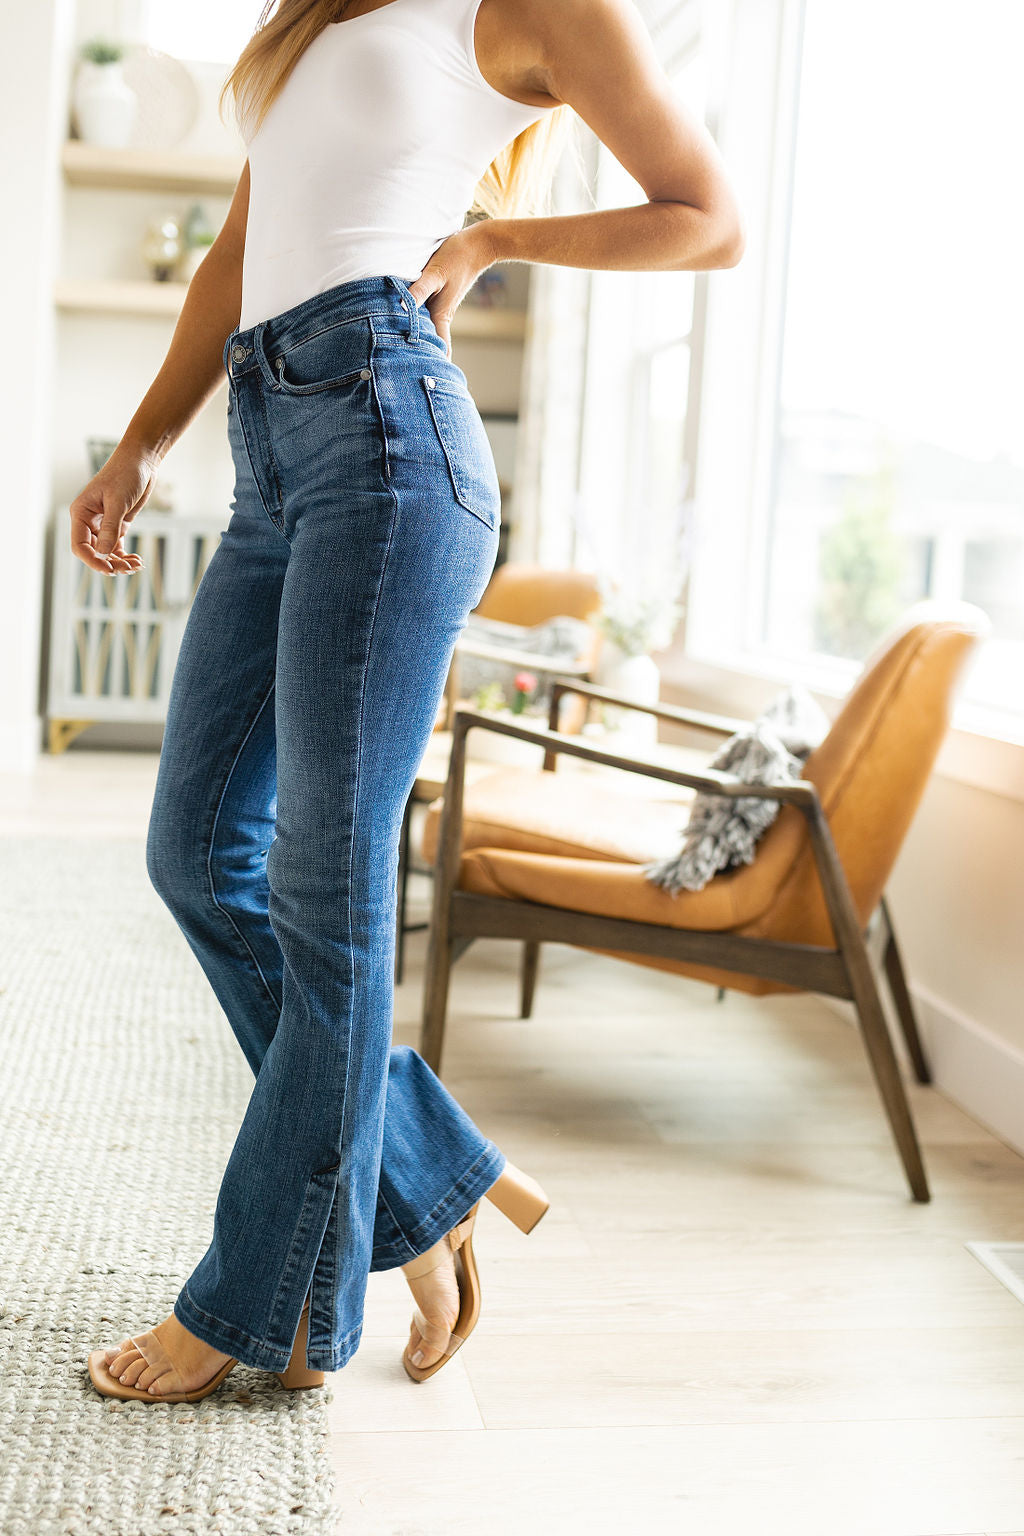 Judy Blue Jeans Women's Tummy Control Skinny Jeans